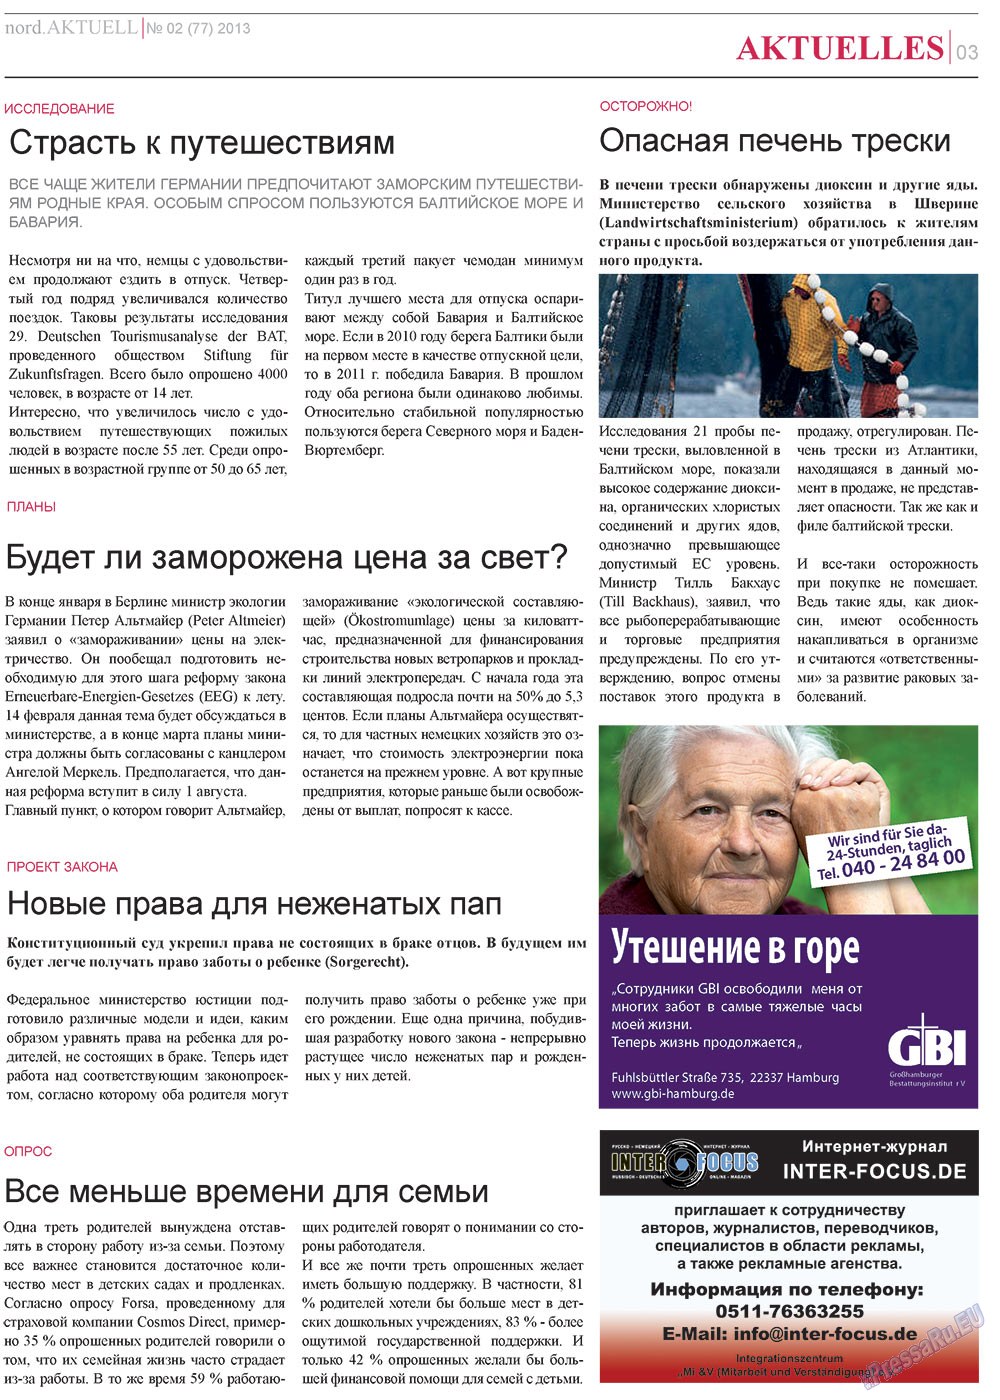 nord.Aktuell (газета). 2013 год, номер 2, стр. 3